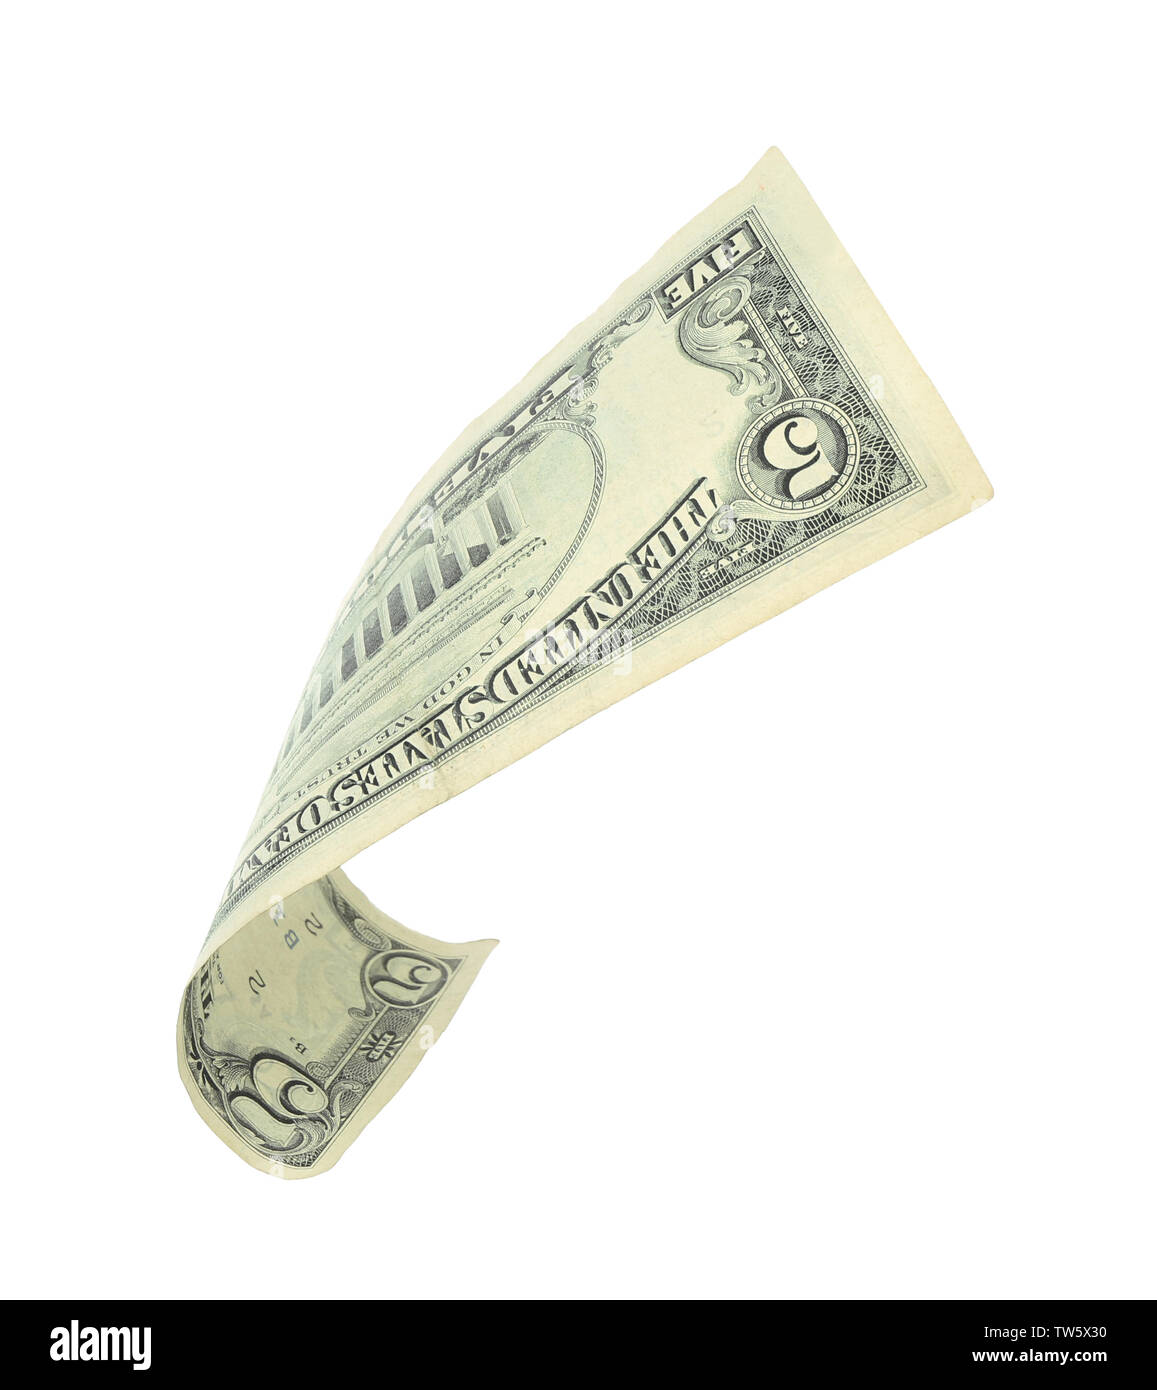 5 dollar bill on white background Stock Photo